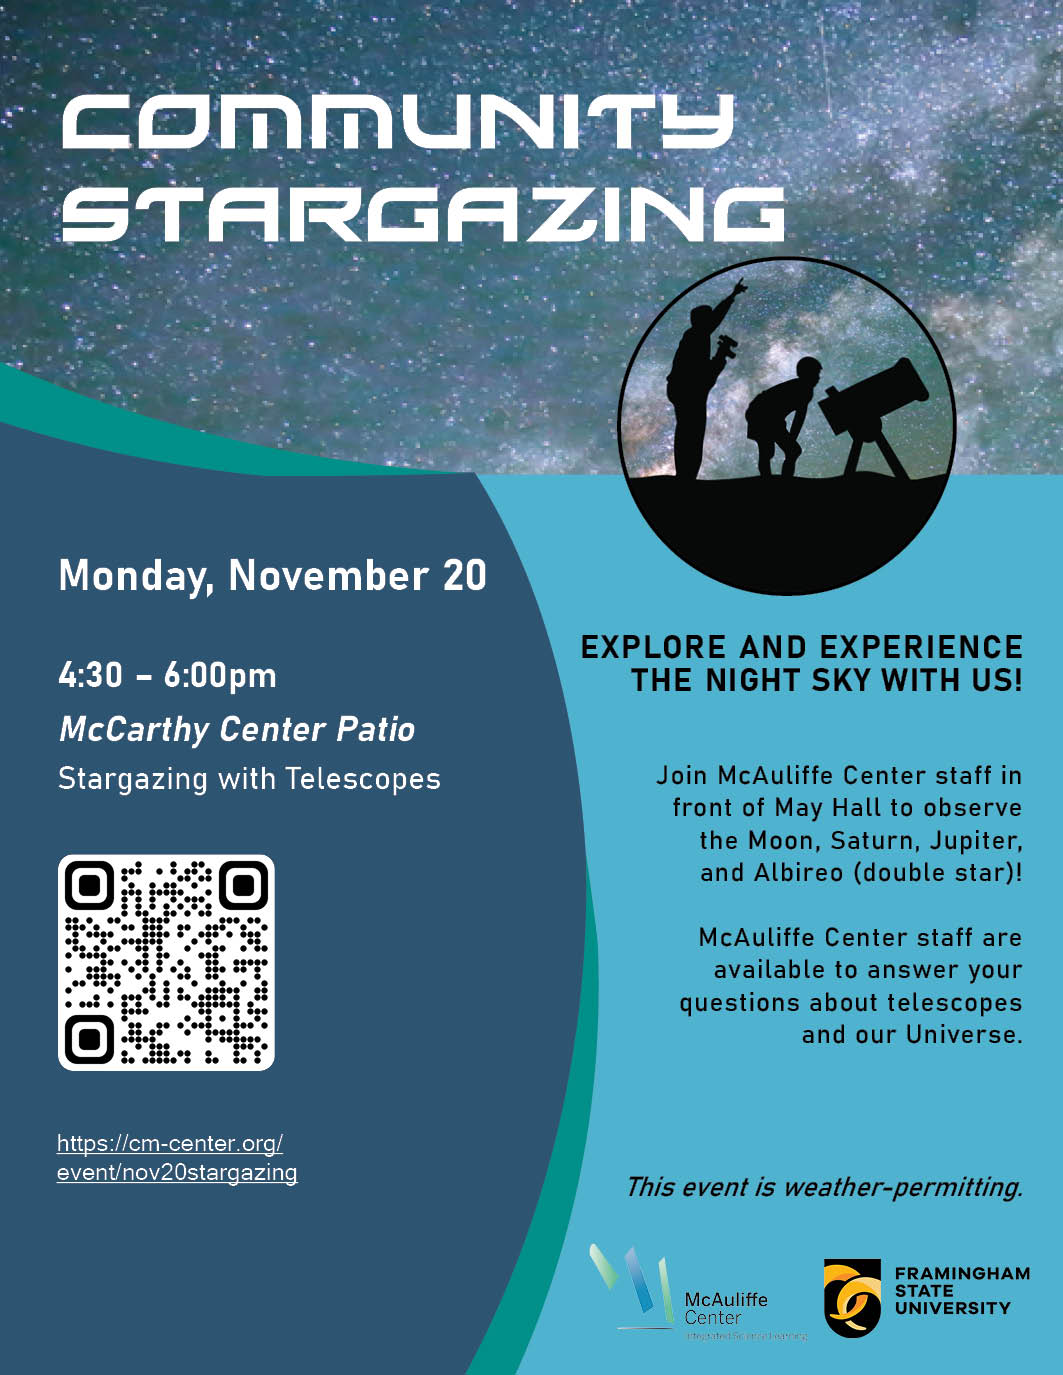 November 20th Community Stargazing 4:30-6:00PM McCarthy Center Patio at Framingham State University